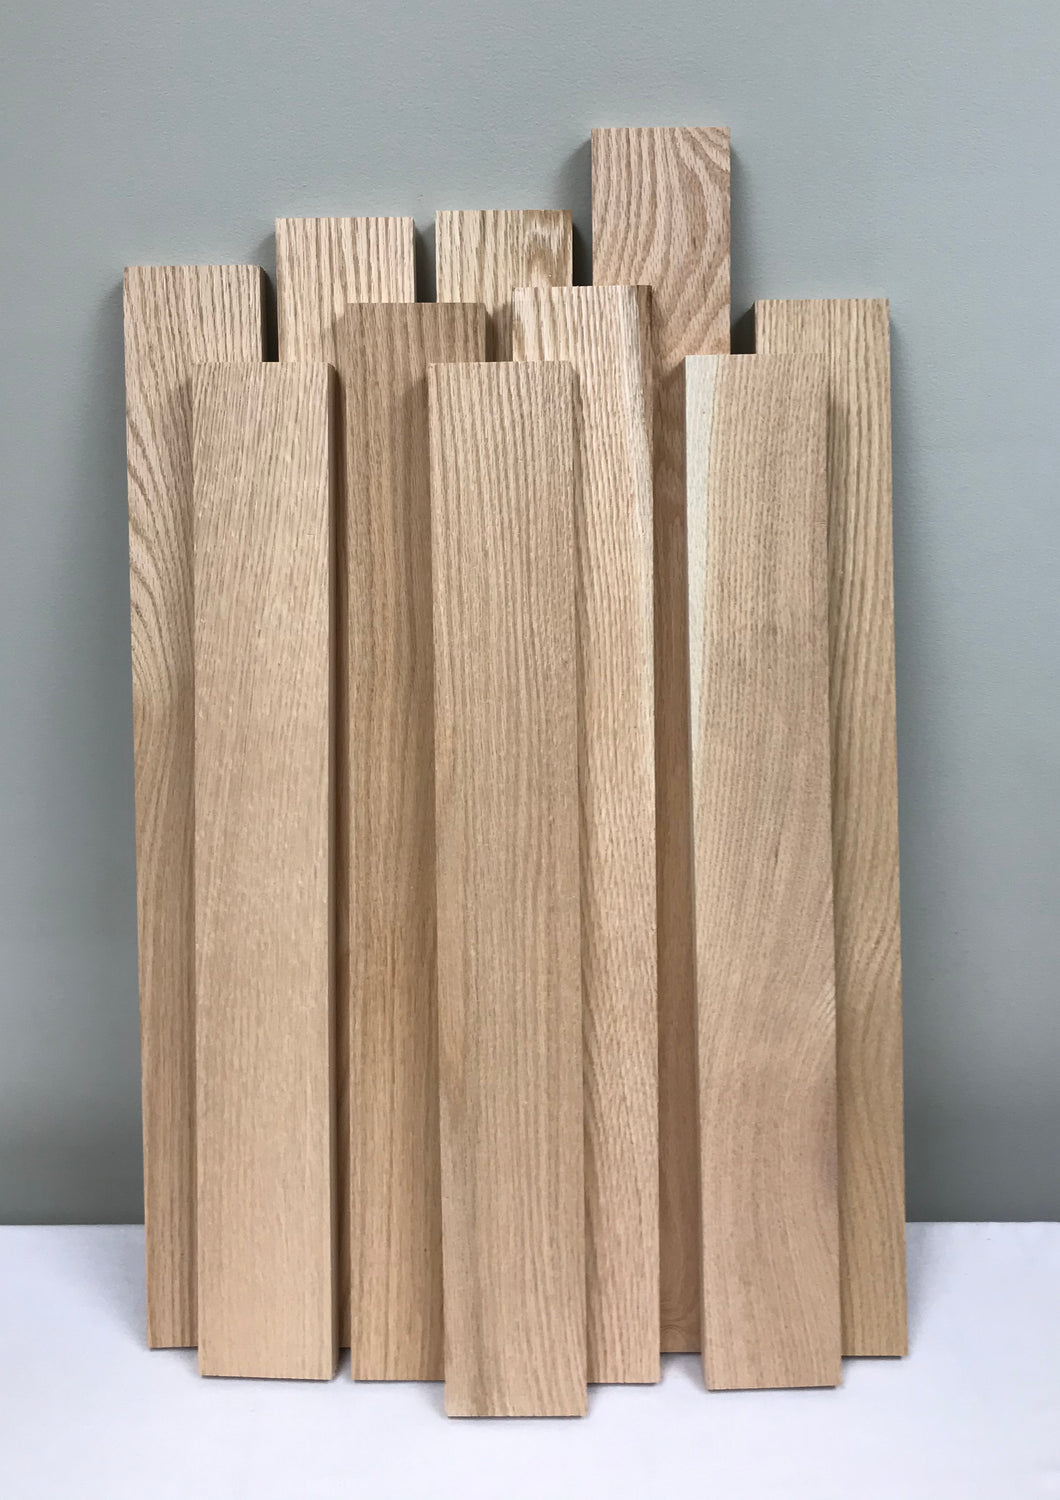 Lumber - Red Oak - Short Length Lumber - 5 board feet  craft pack